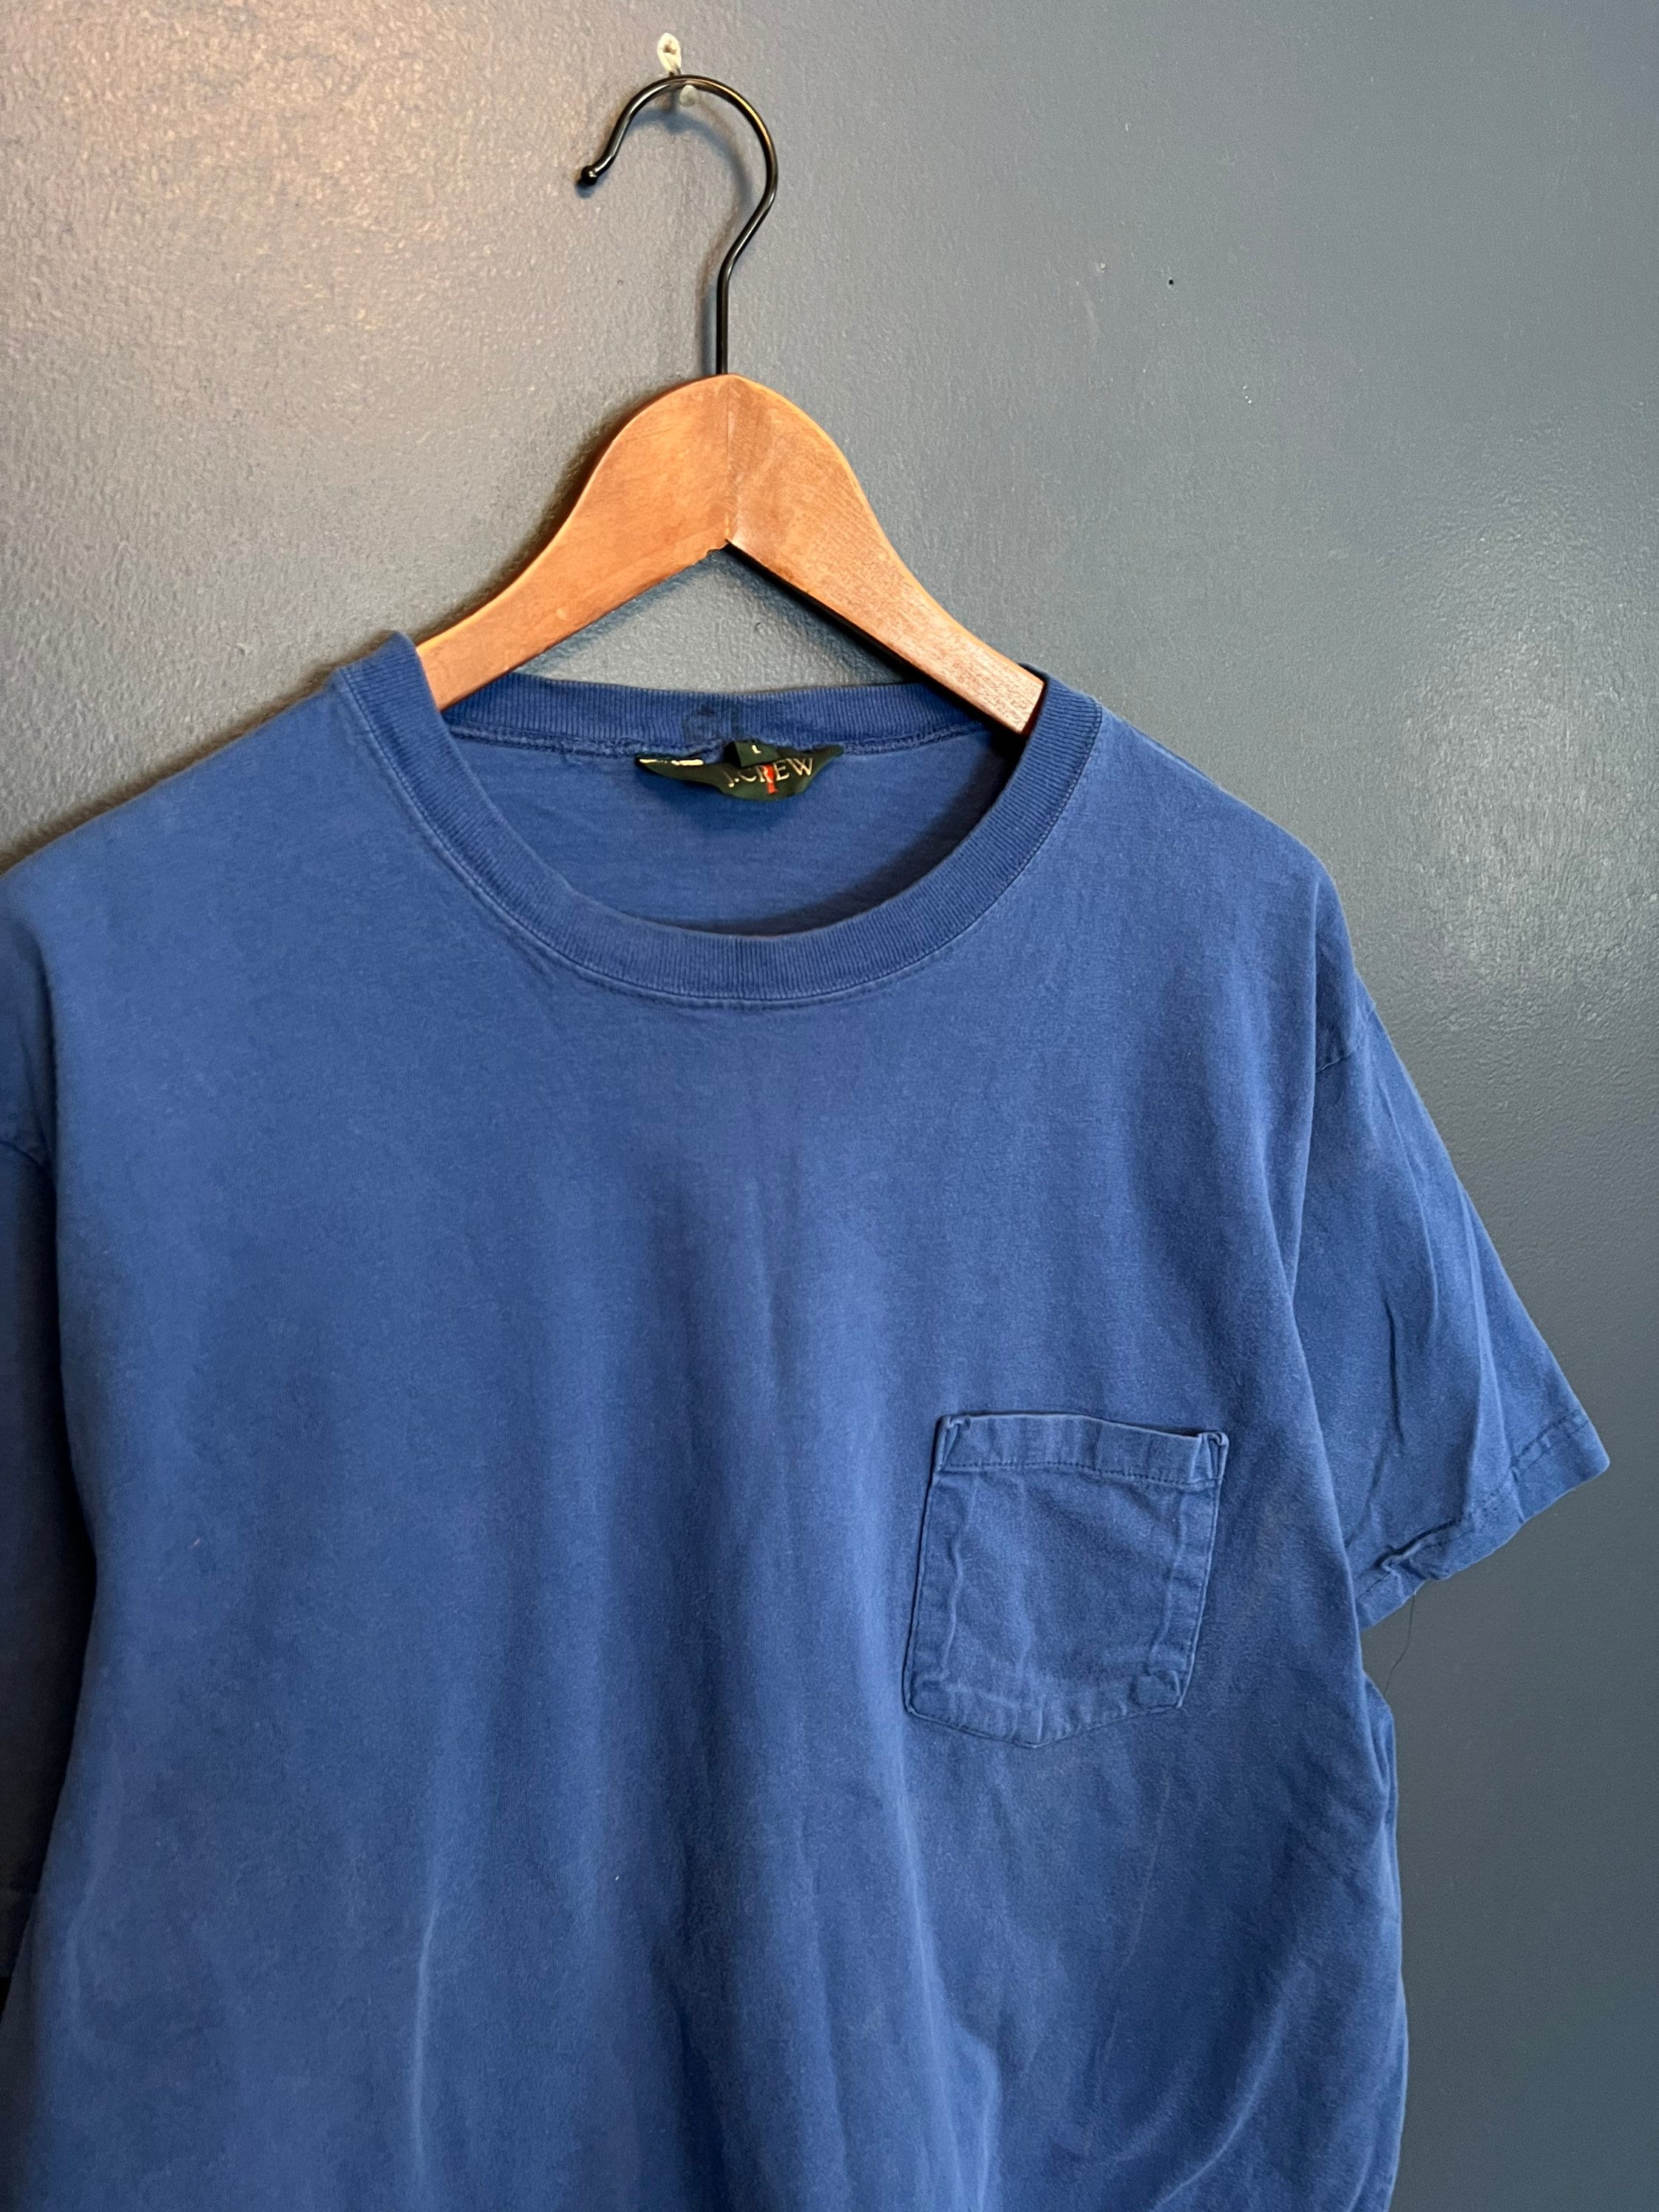 Unisex Old Navy Jennifer Lopez Gender-Neutral Graphic T-Shirt XLARGE Blue  JLO